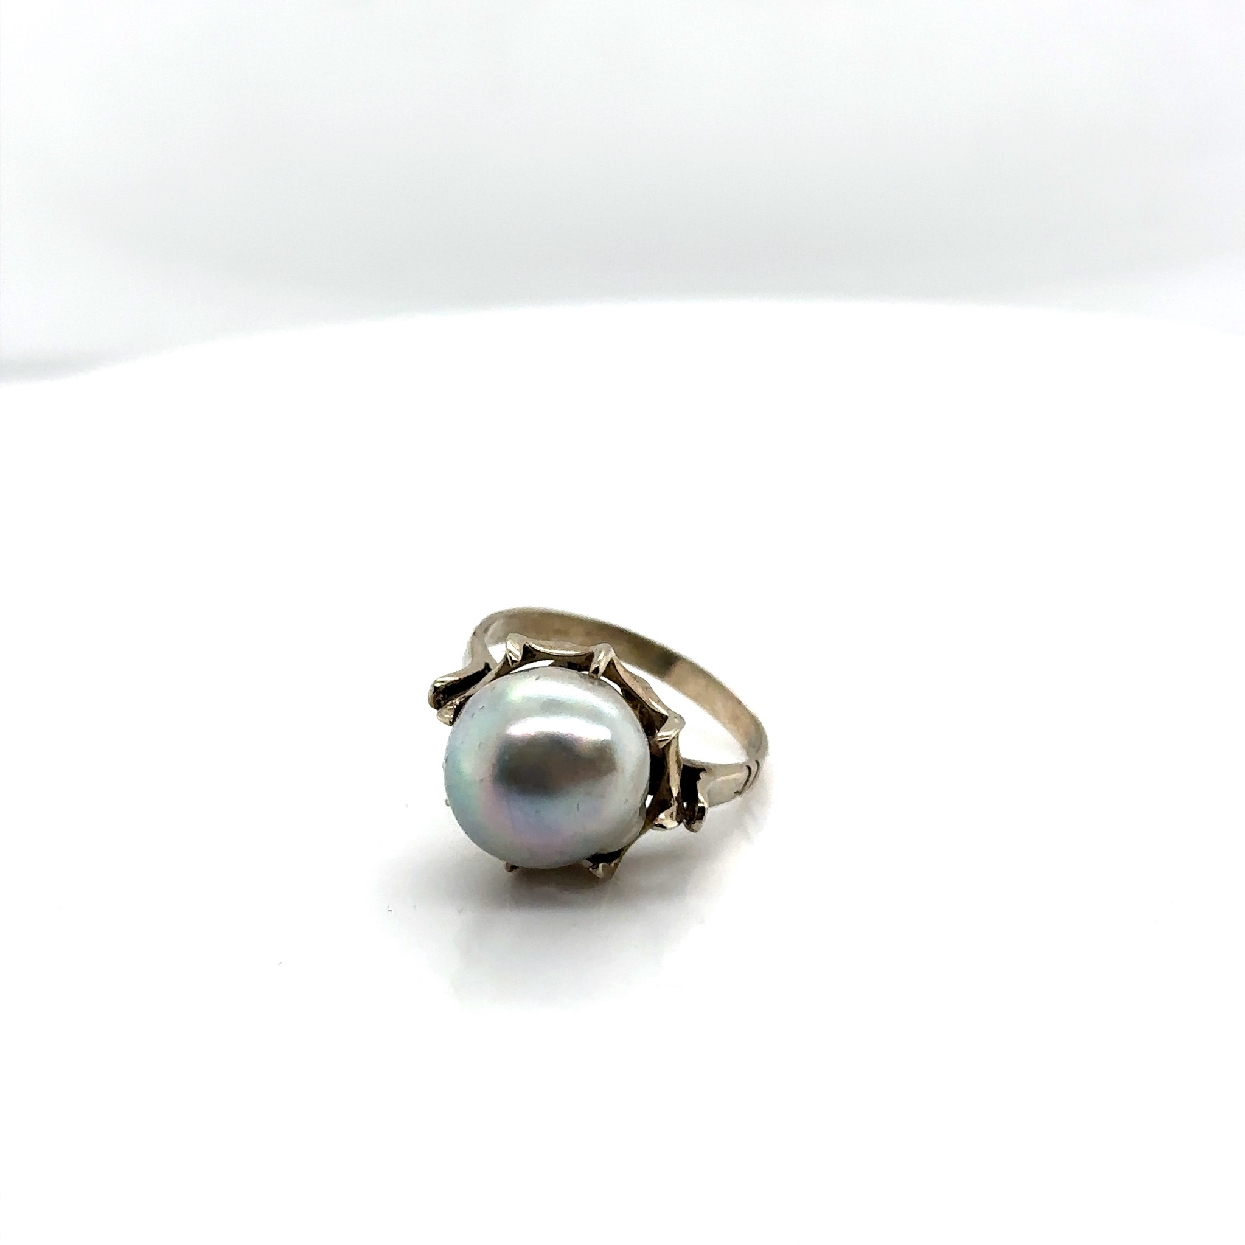 14K Vintage White Gold Baroque Saltwater Pearl Ring

Size 5.25